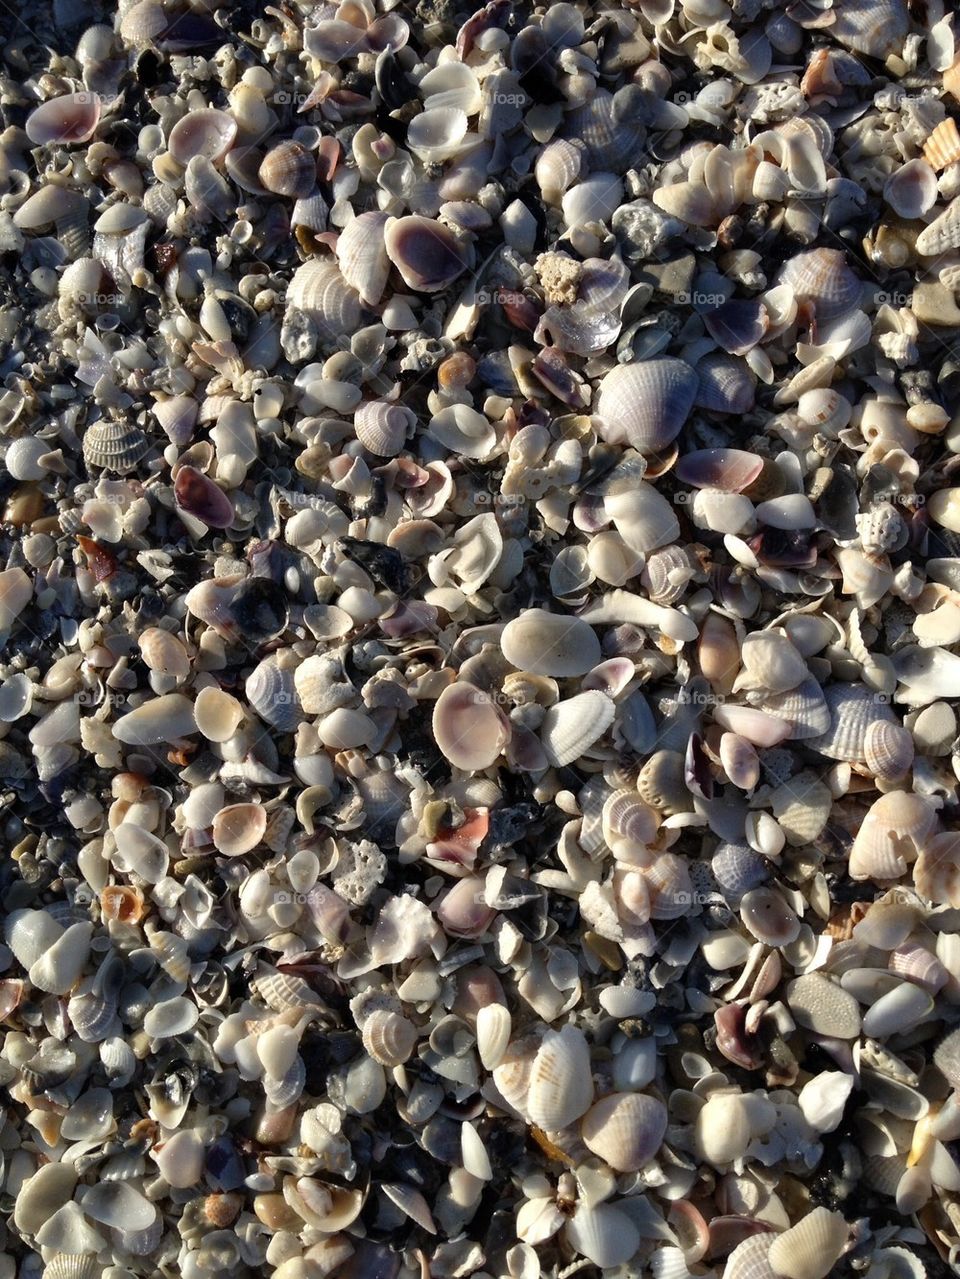 Ft Myers Beach sea shells